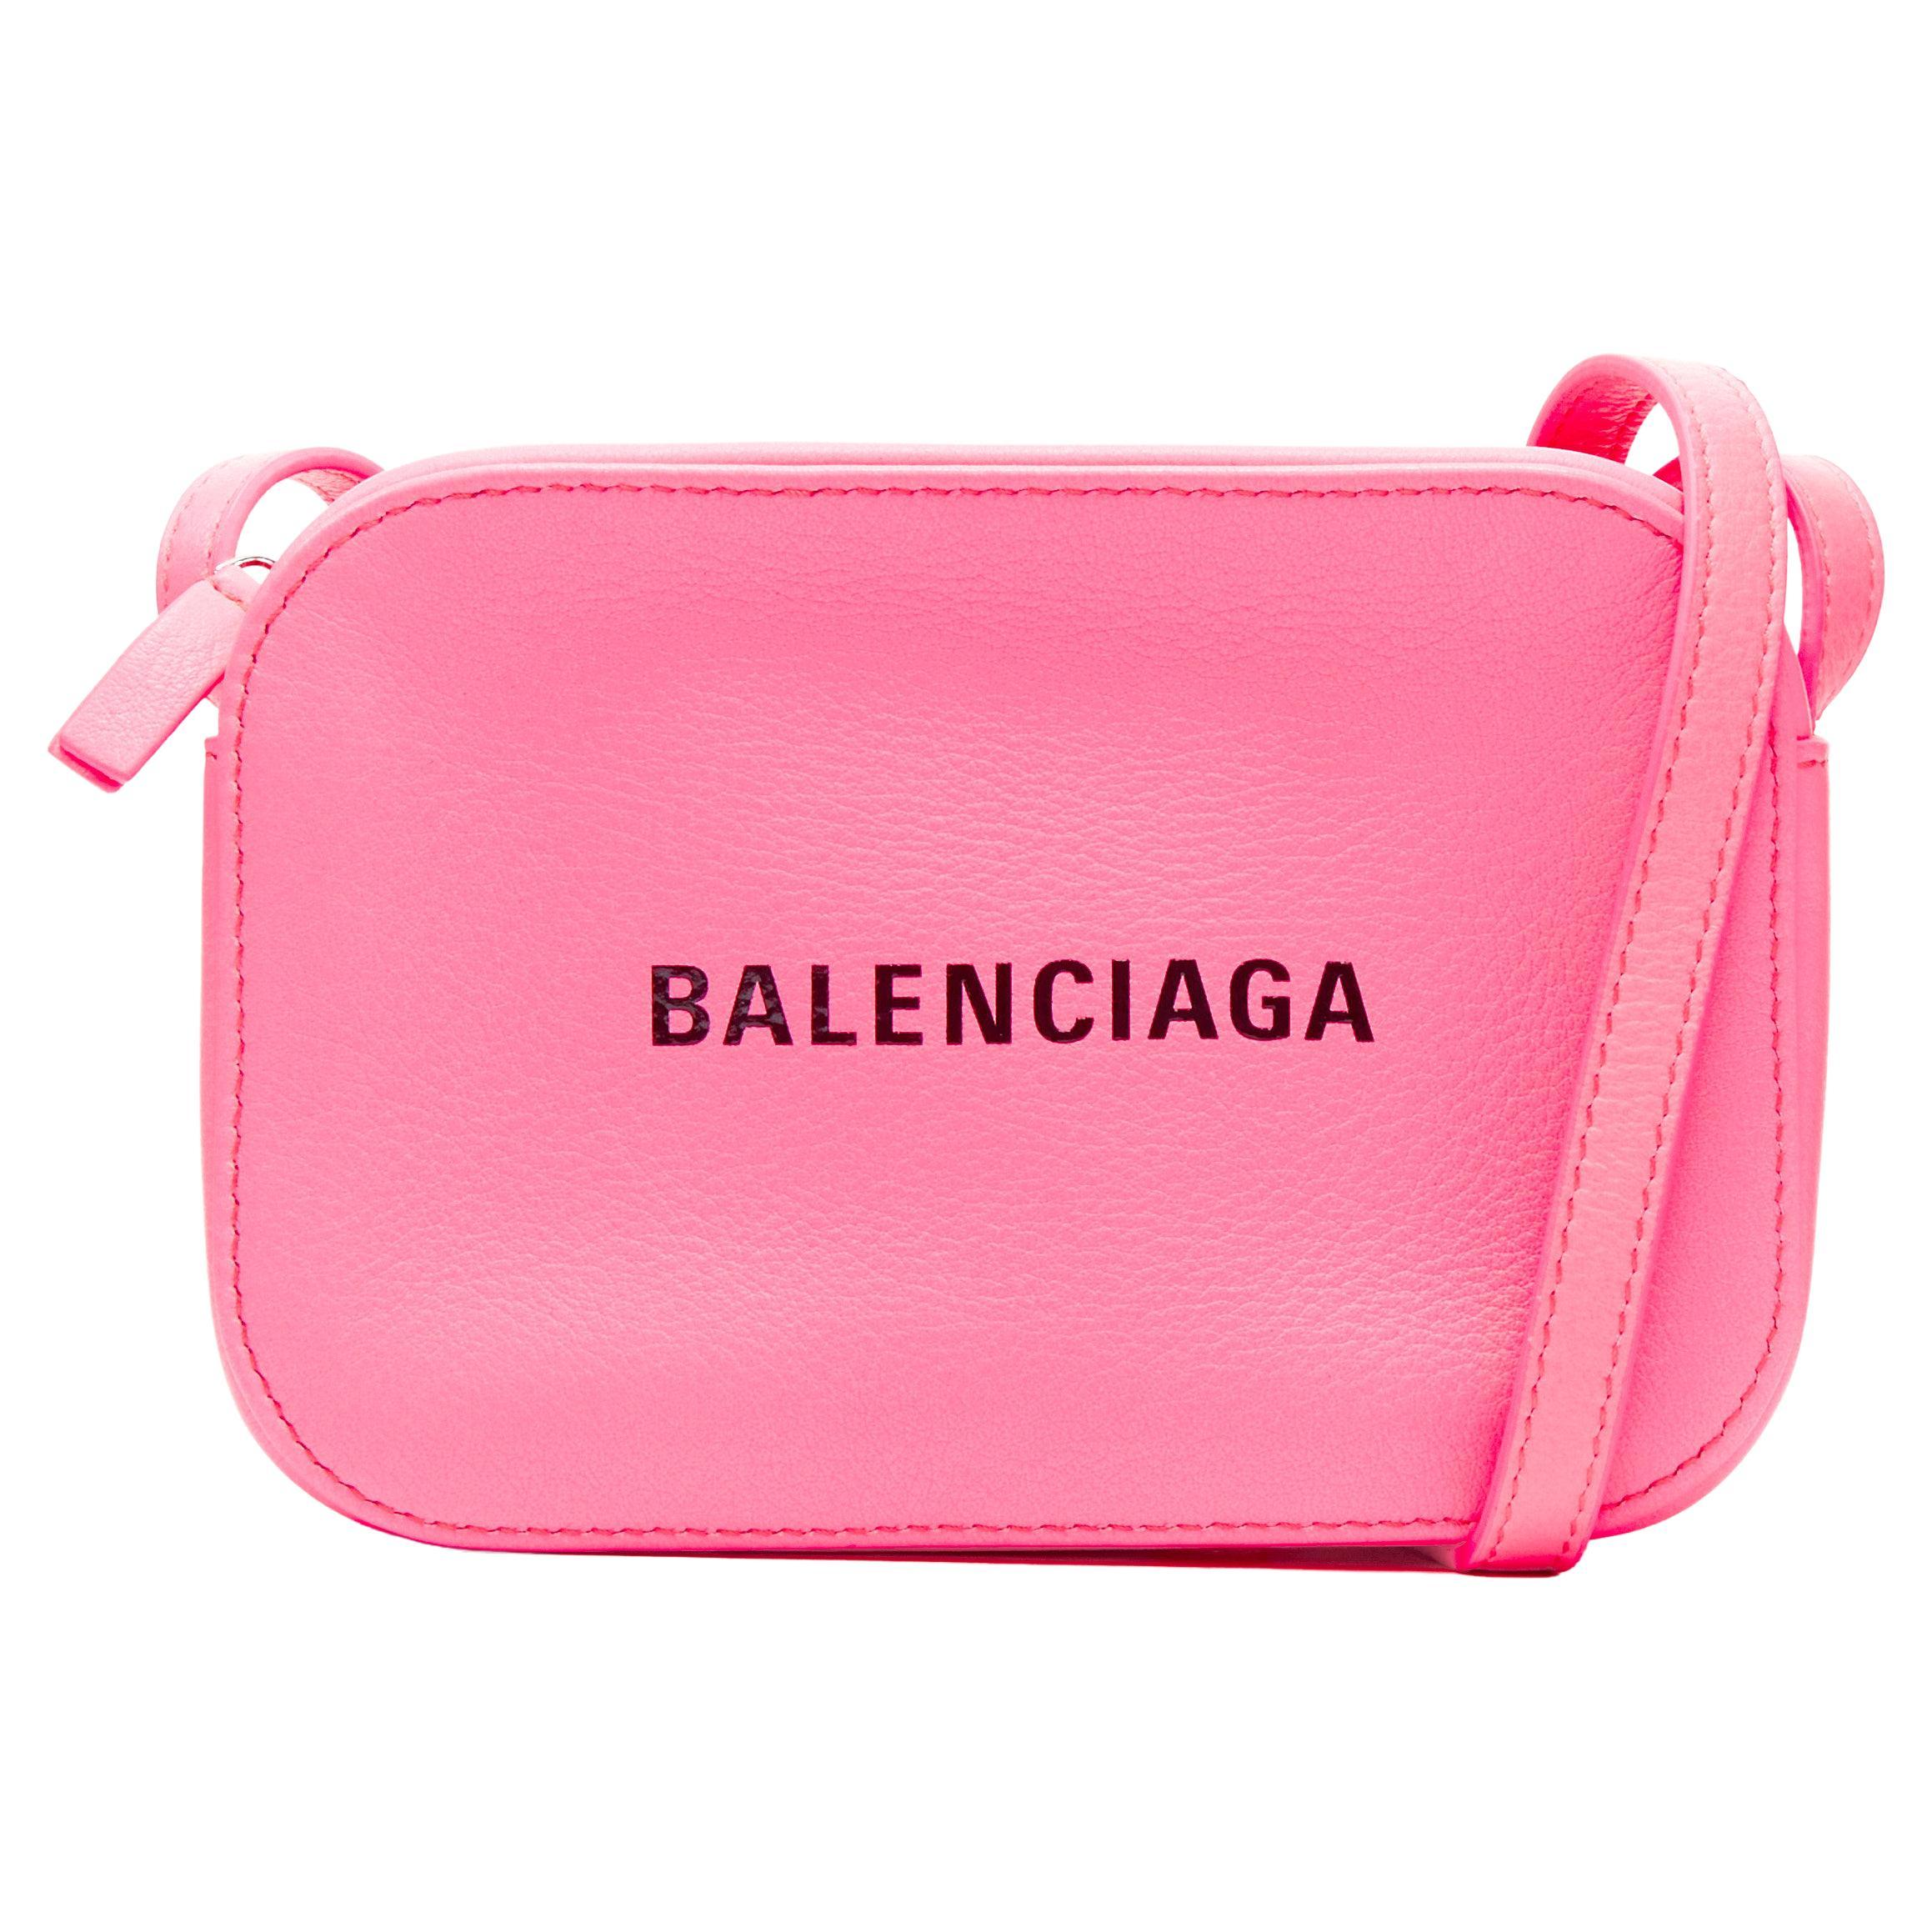 Balenciaga VINTAGE BALENCIAGA FULL MONOGRAM HANDHELD BAG HANDBAG